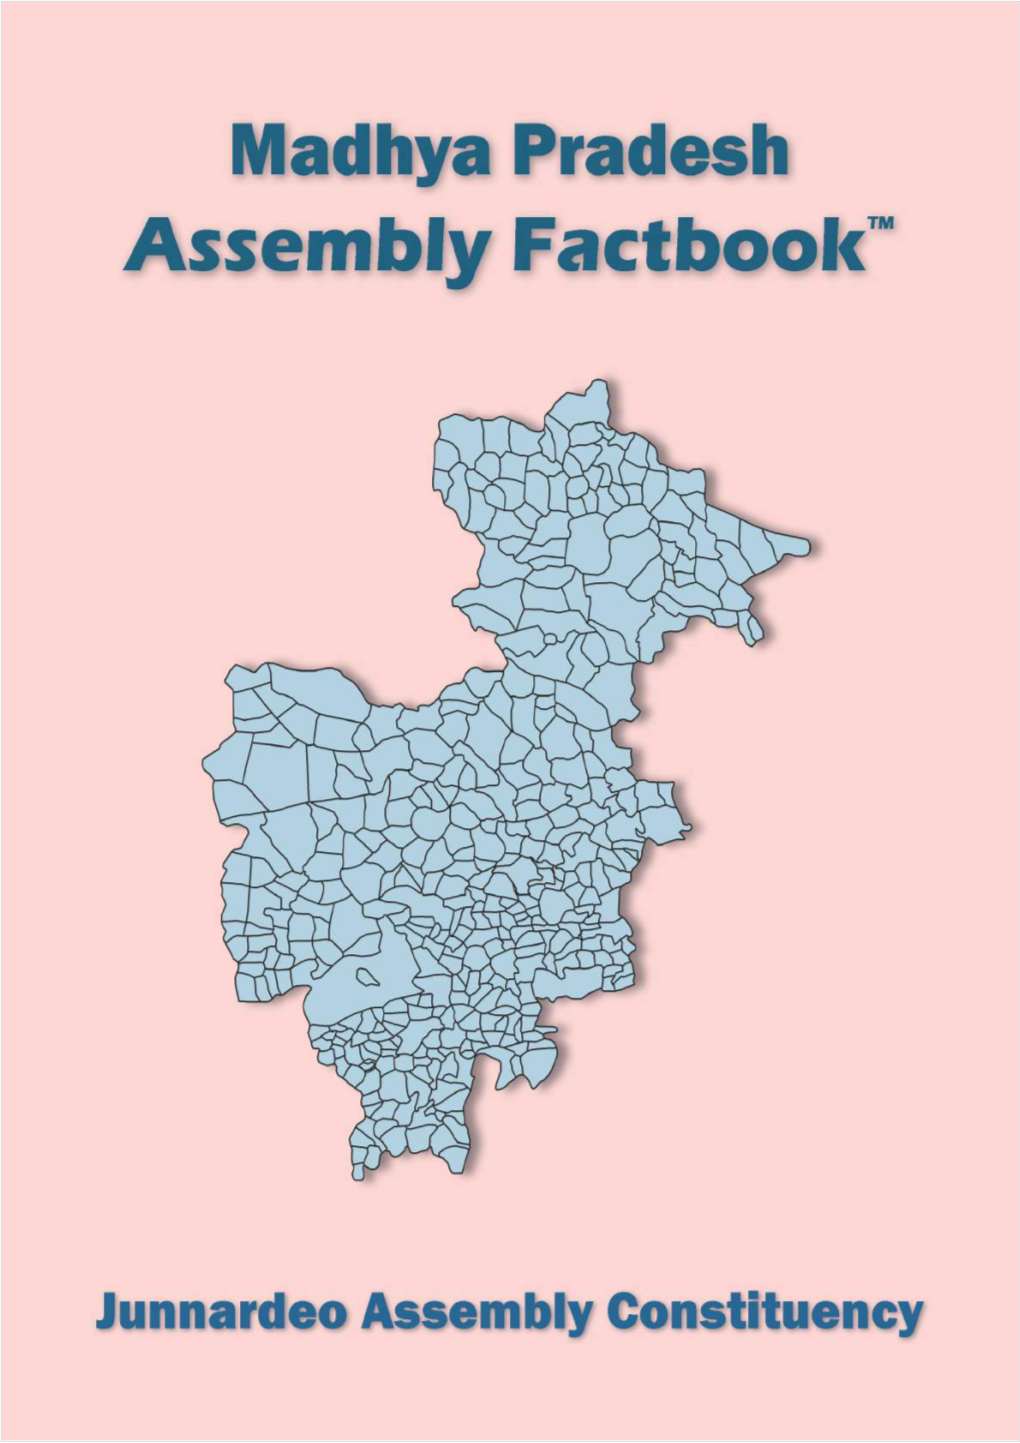 Junnardeo Assembly Madhya Pradesh Factbook